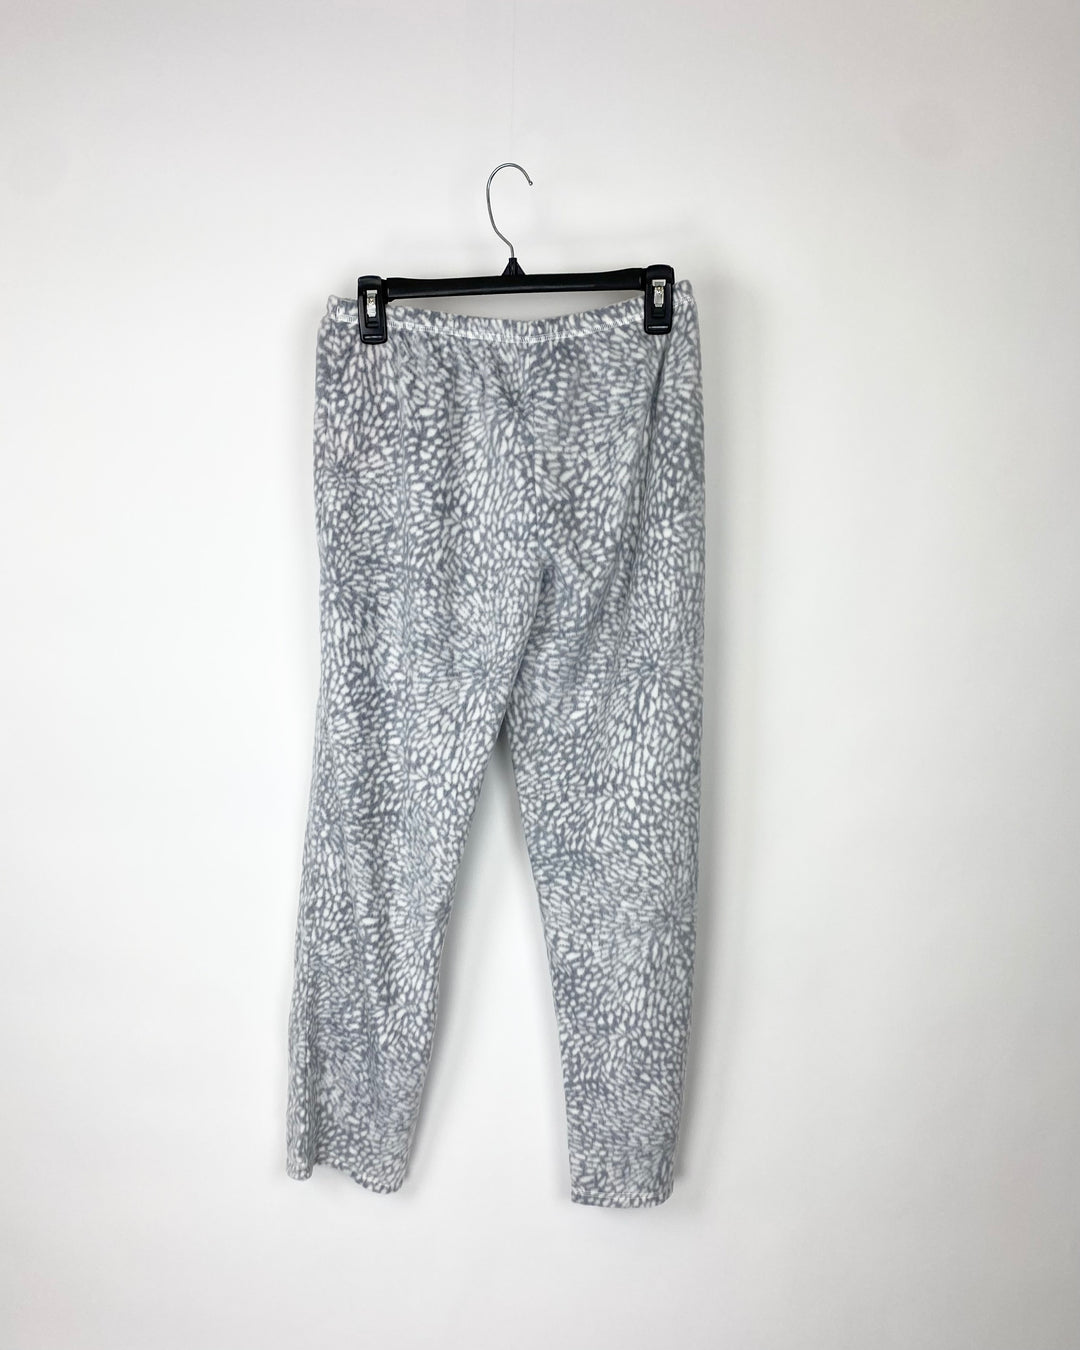 Midnight Gray Patterned Pajama Set - Small